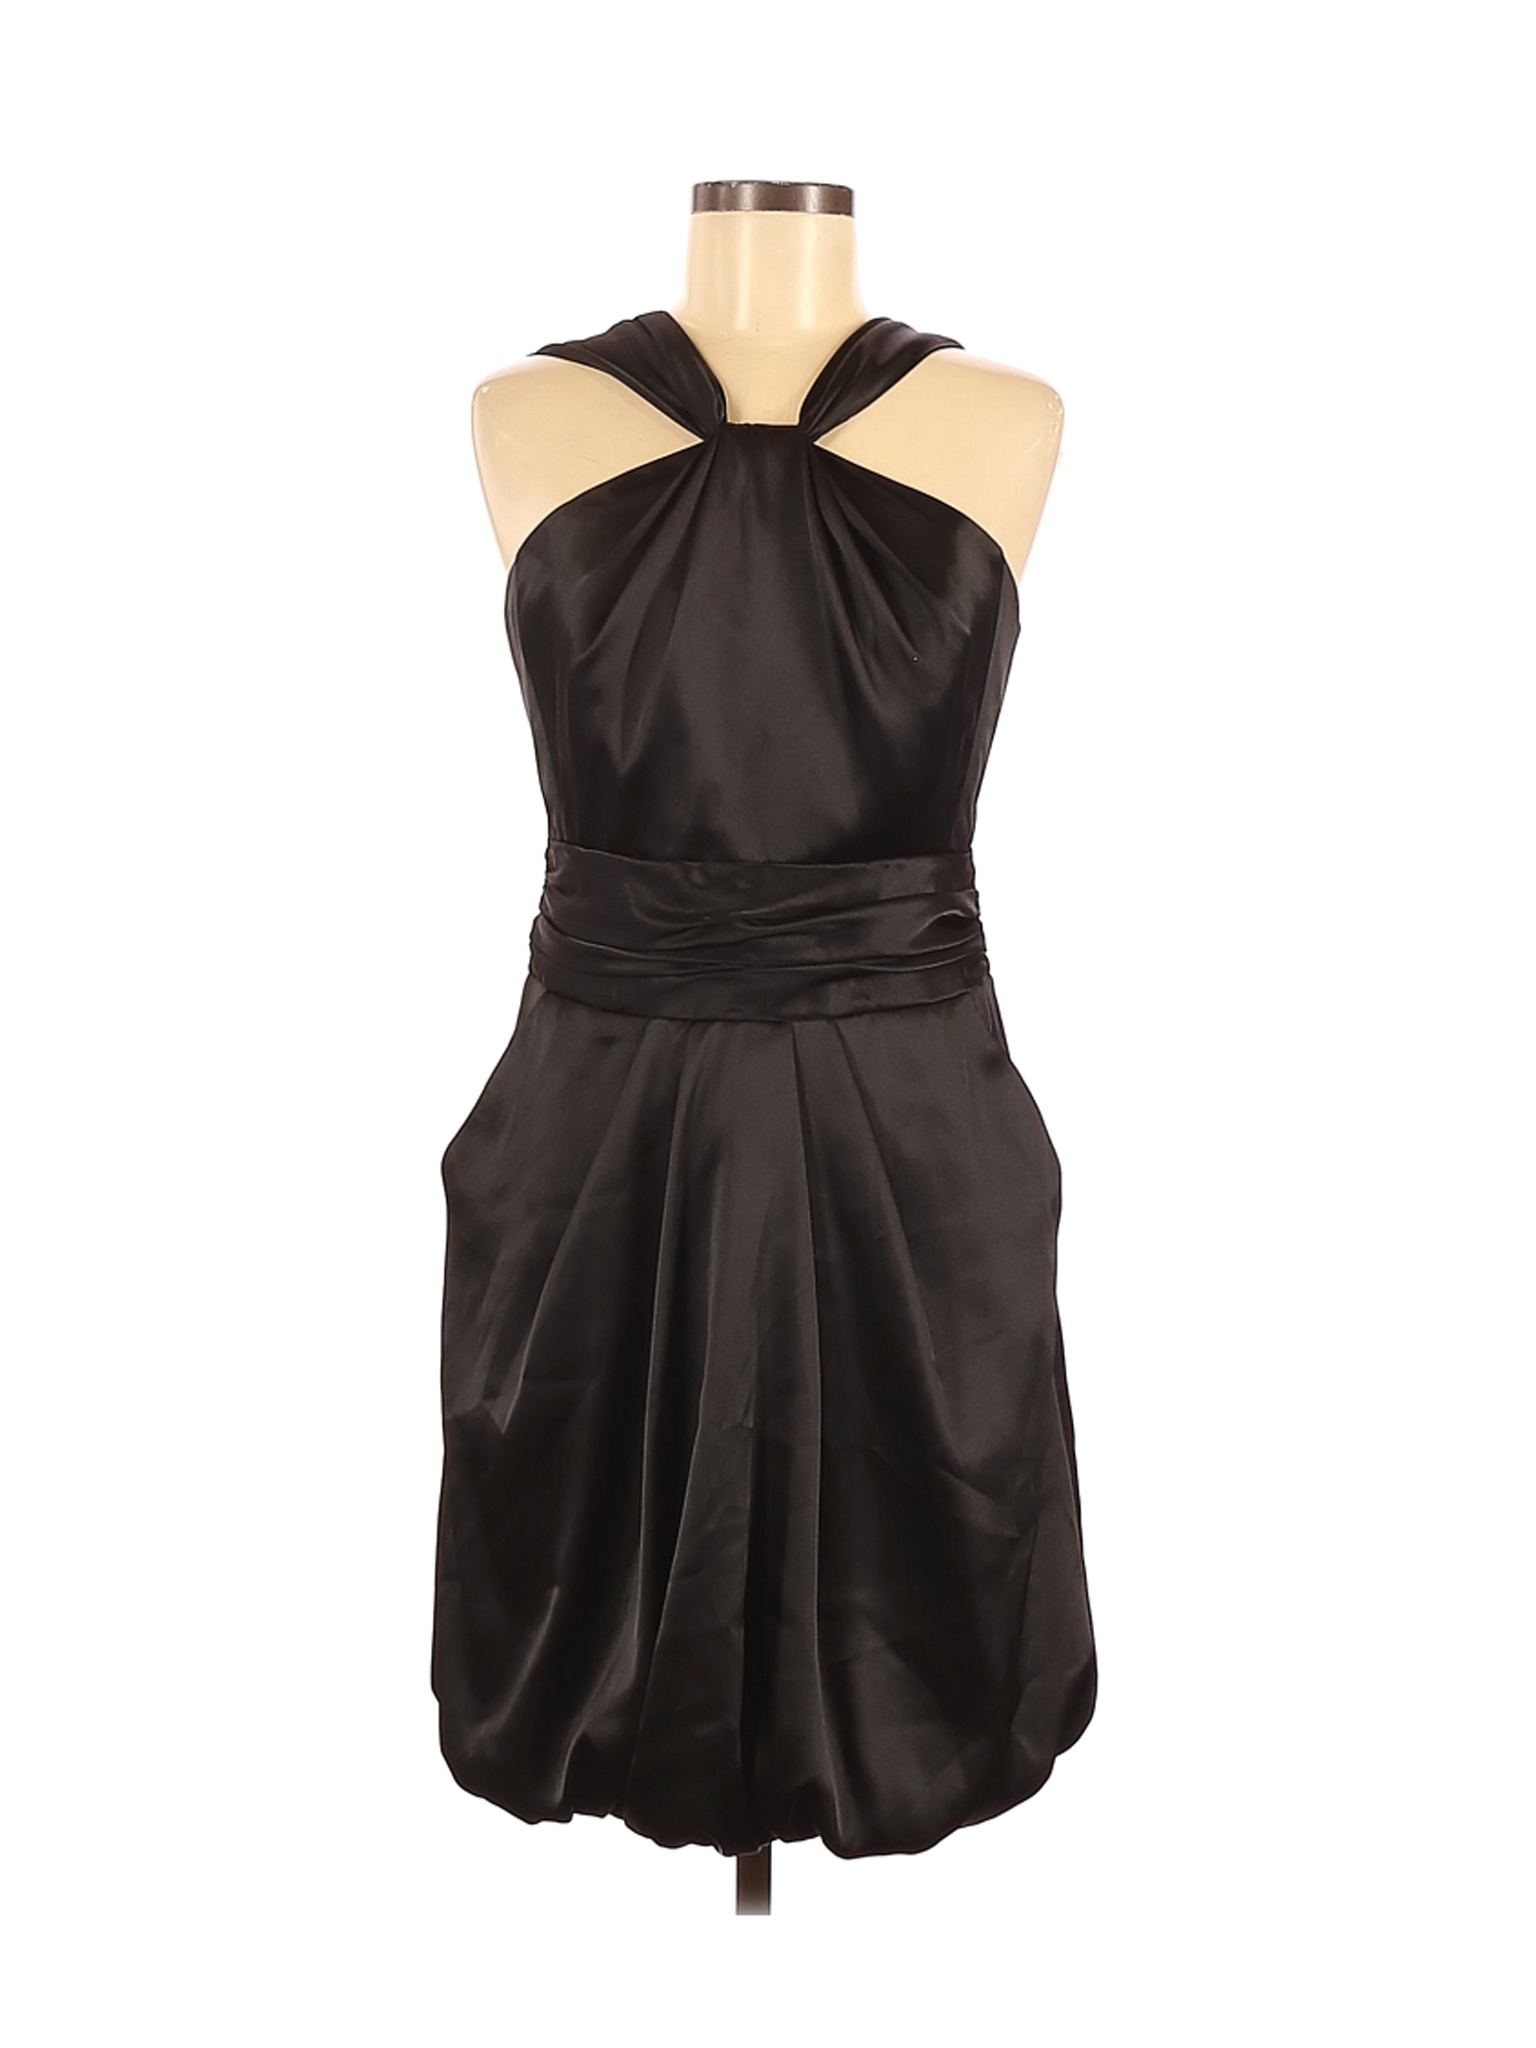 David's Bridal Women Black Cocktail Dress 8 | eBay